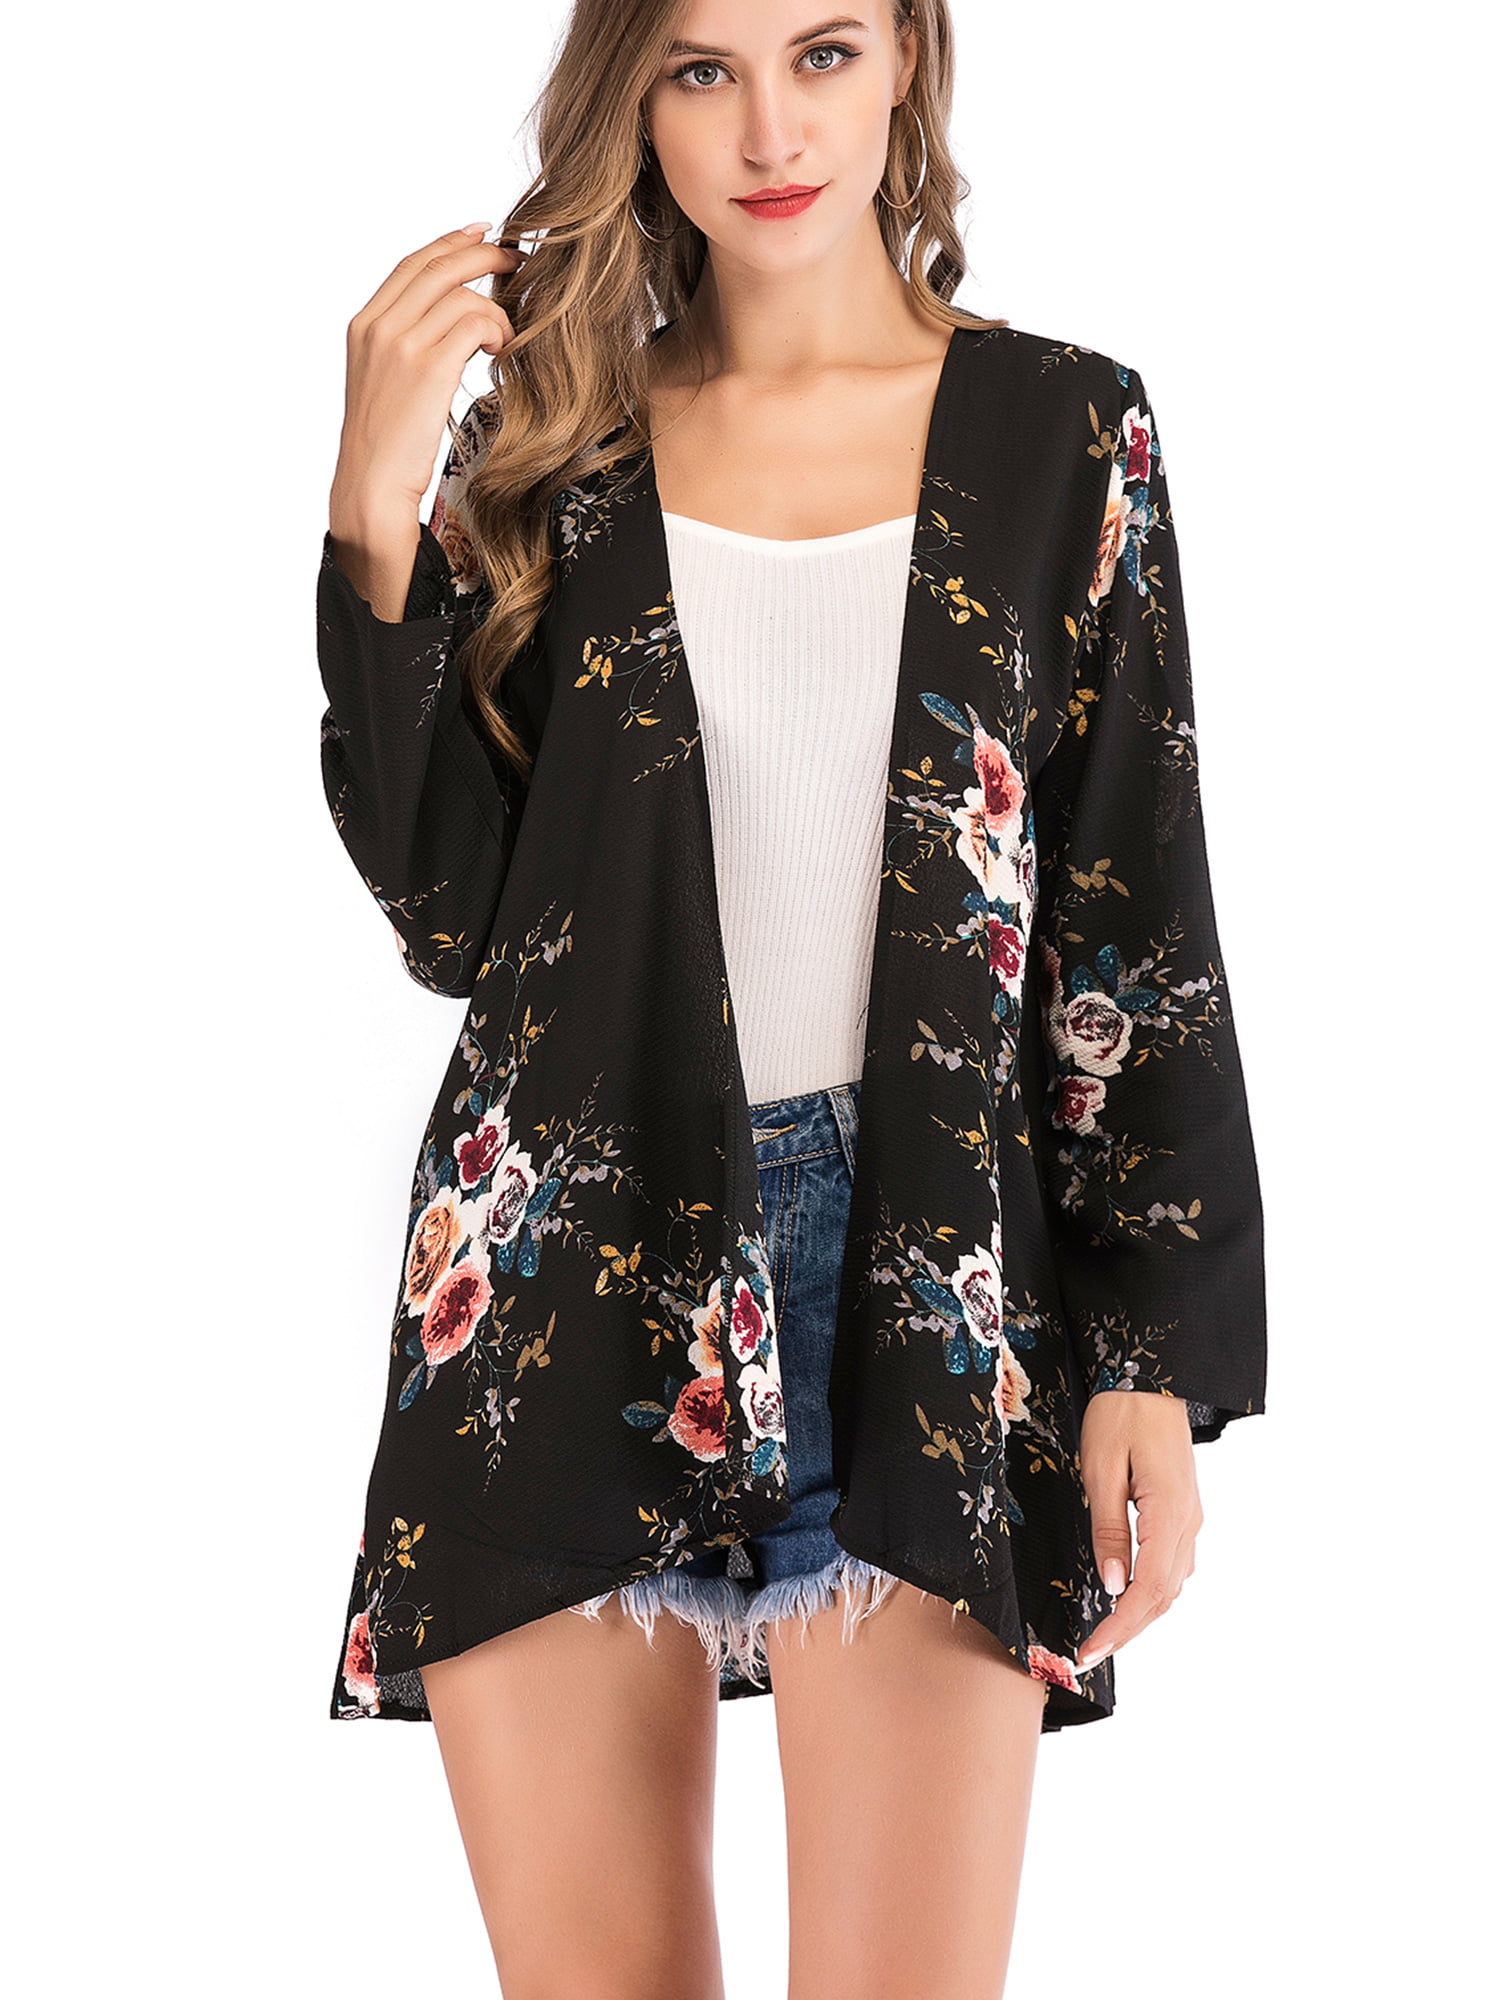 SAYFUT - Plus Size Women's Kimono Cardigan Coat Blouse Tops Floral ...